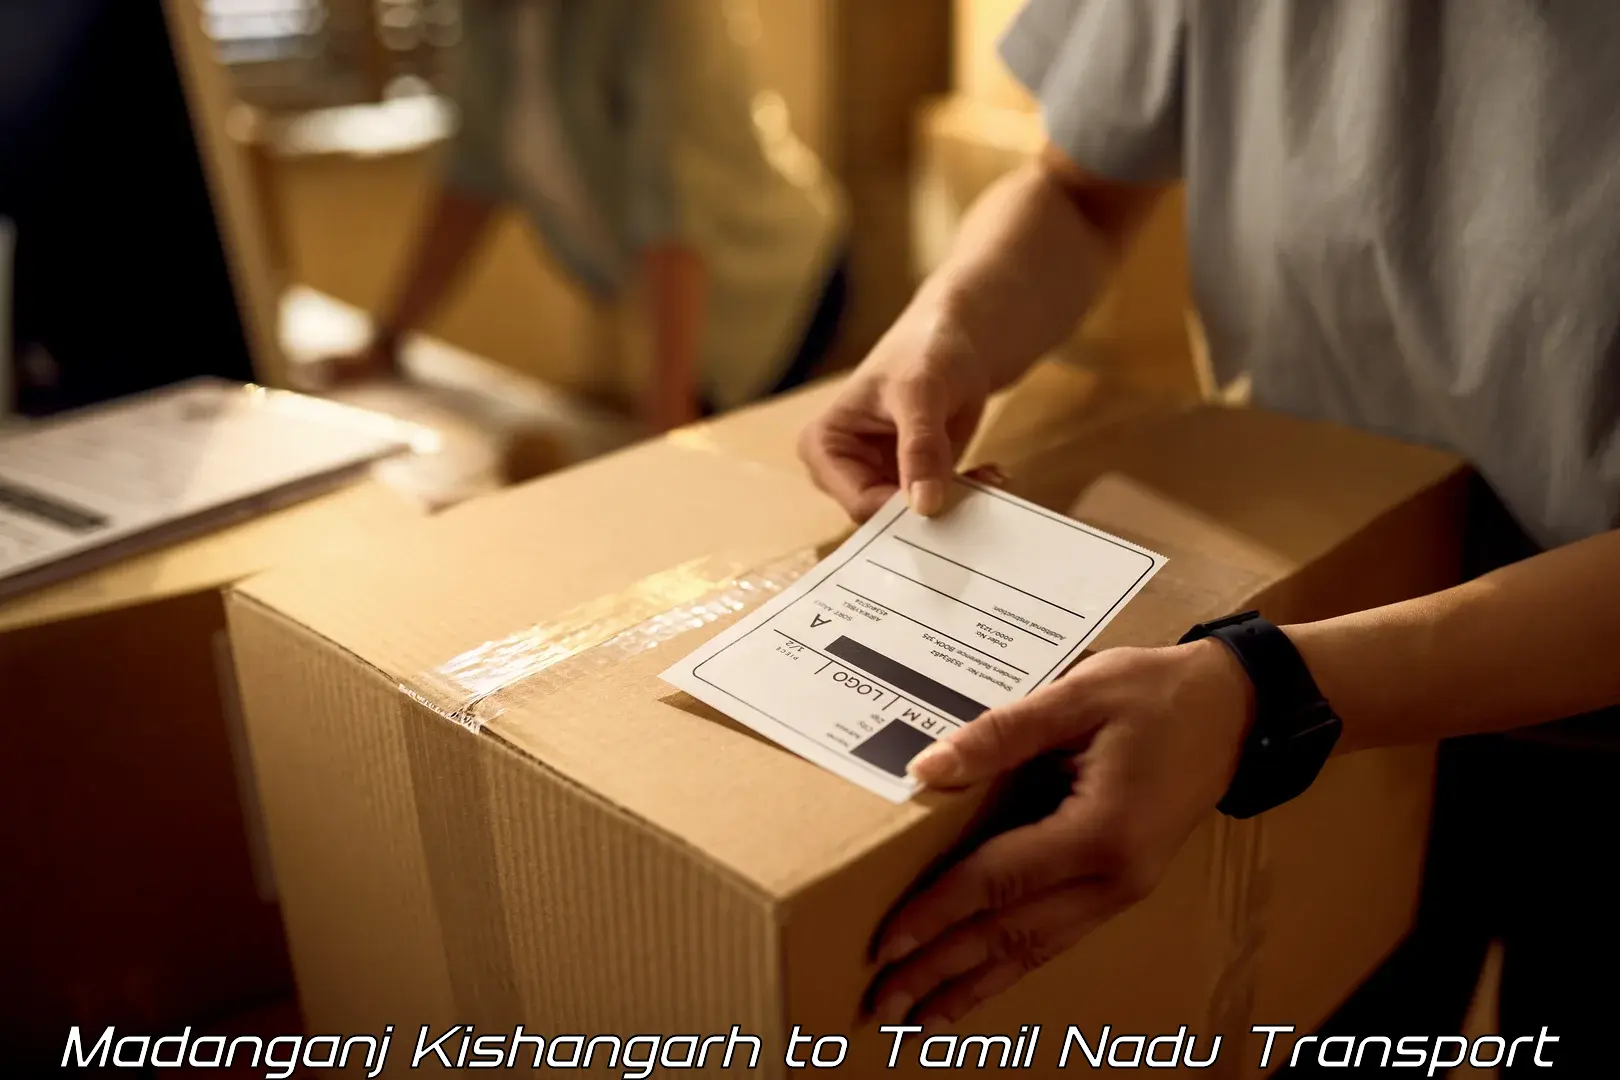 Furniture transport service Madanganj Kishangarh to Periyakulam